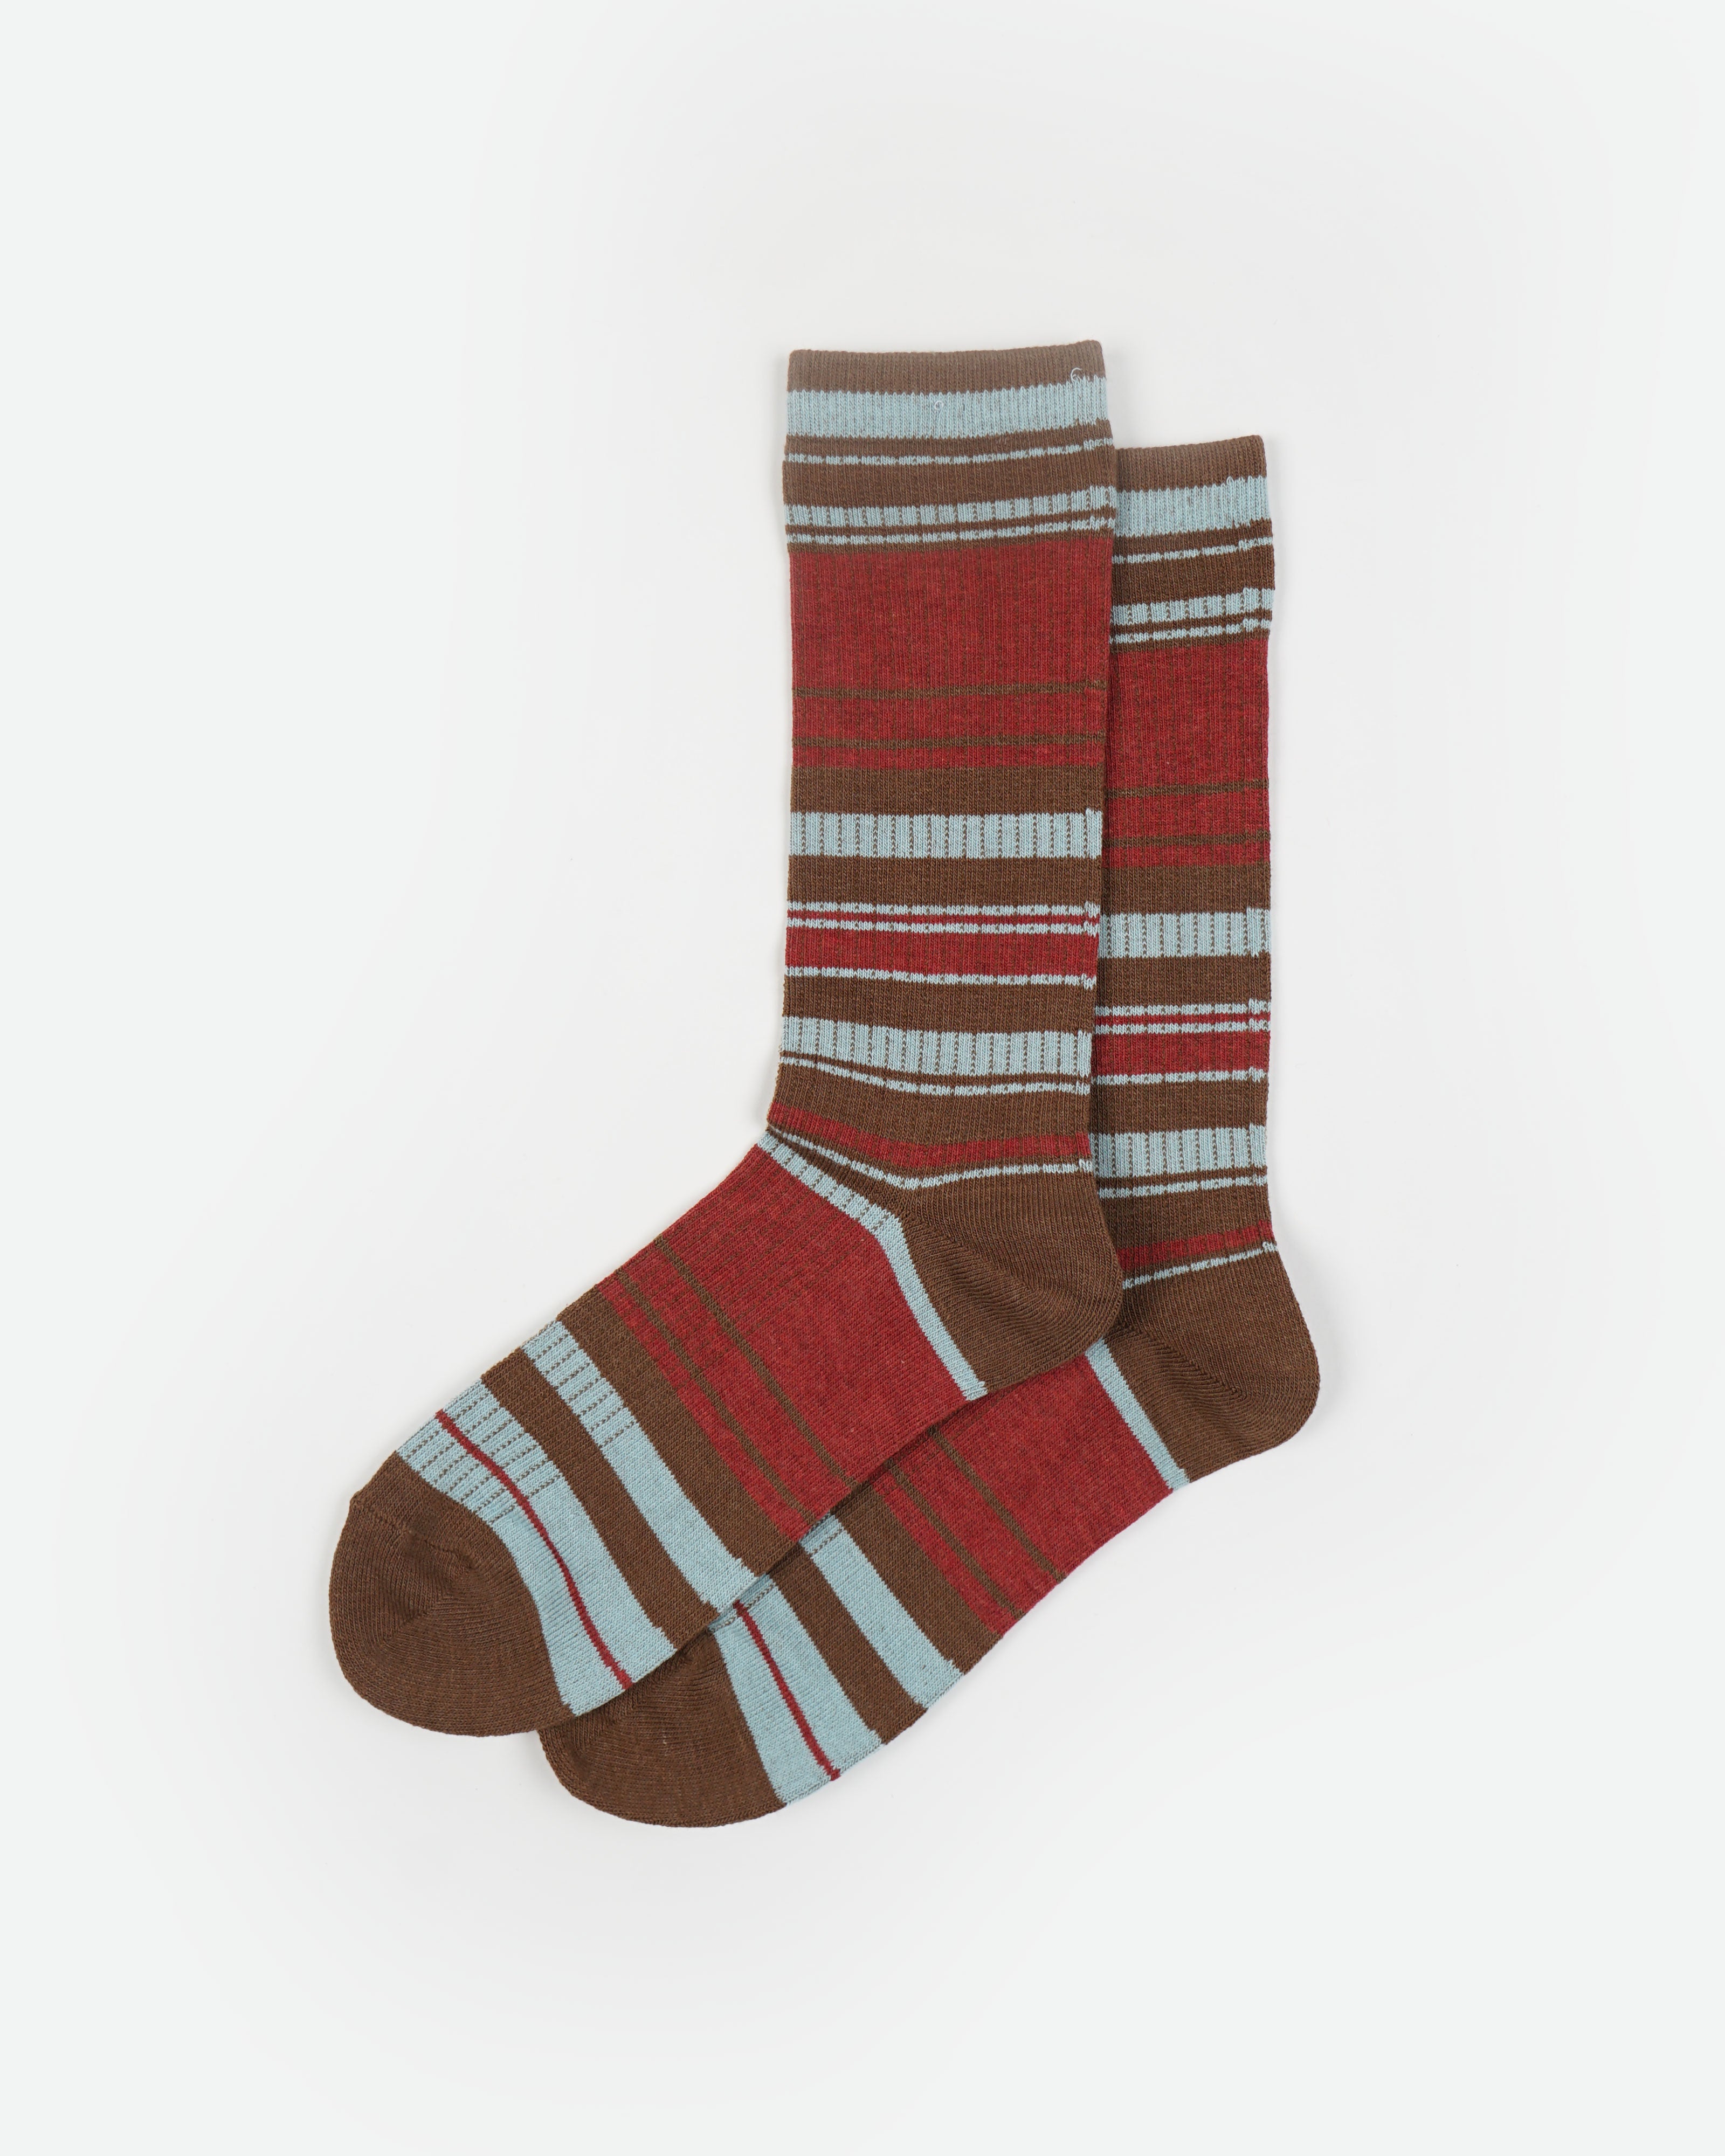 Multicolor Striped Socks / Red x Brown x Light Blue